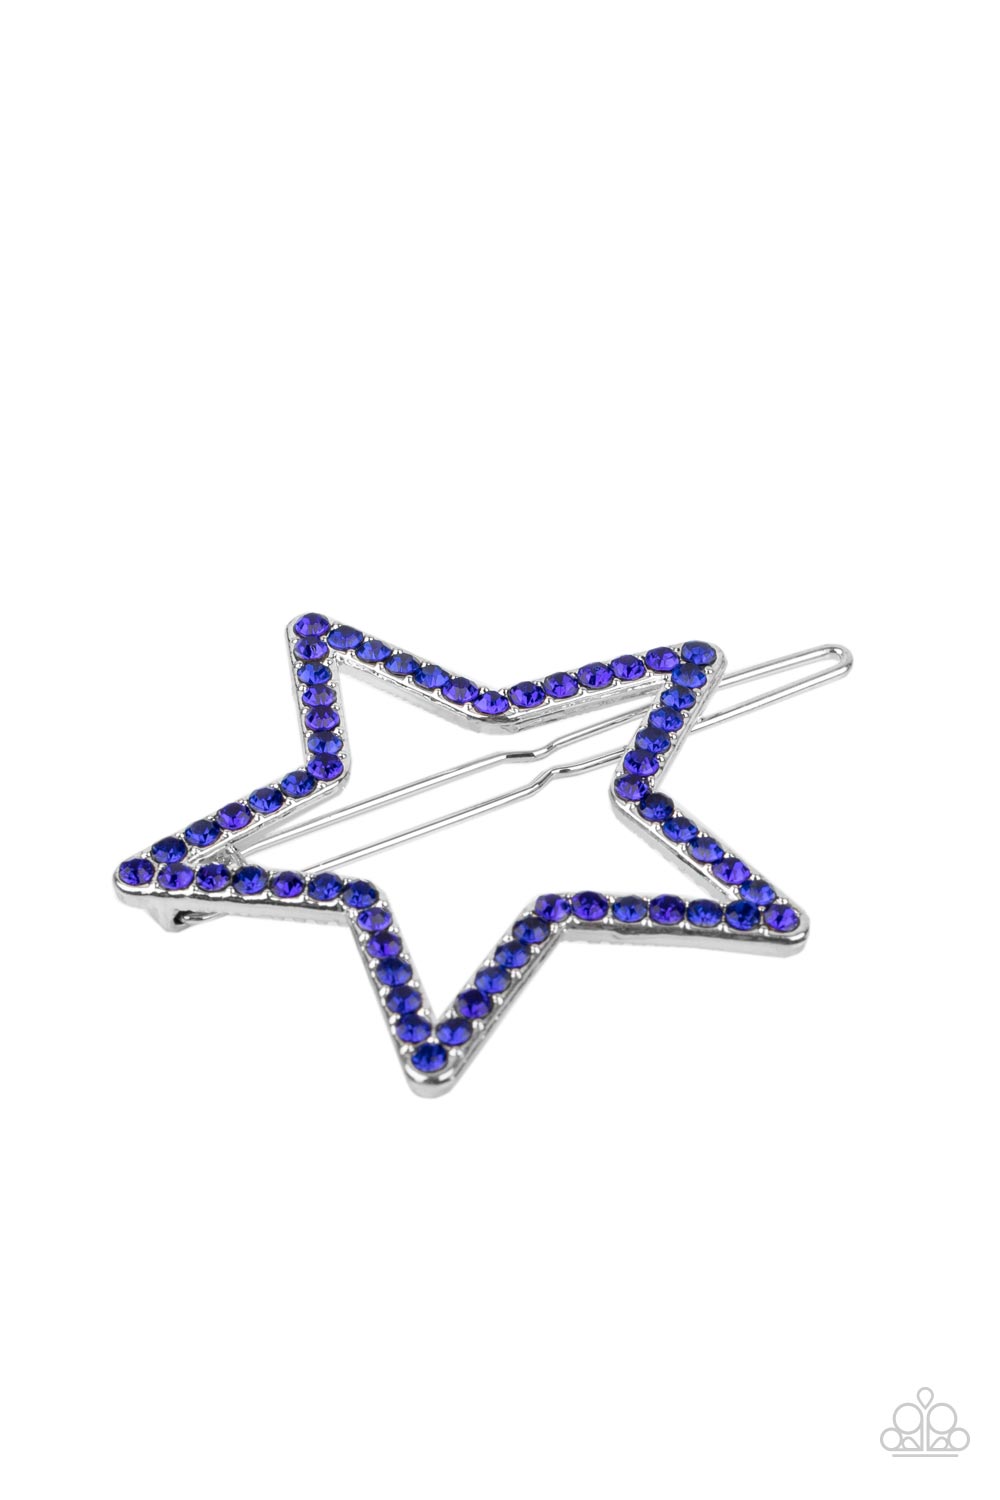 Stellar Standout - Blue Star Hair Clip Paparazzi $5 Accessories Barrettes. #P7SS-BLXX-165XX. Free Shipping